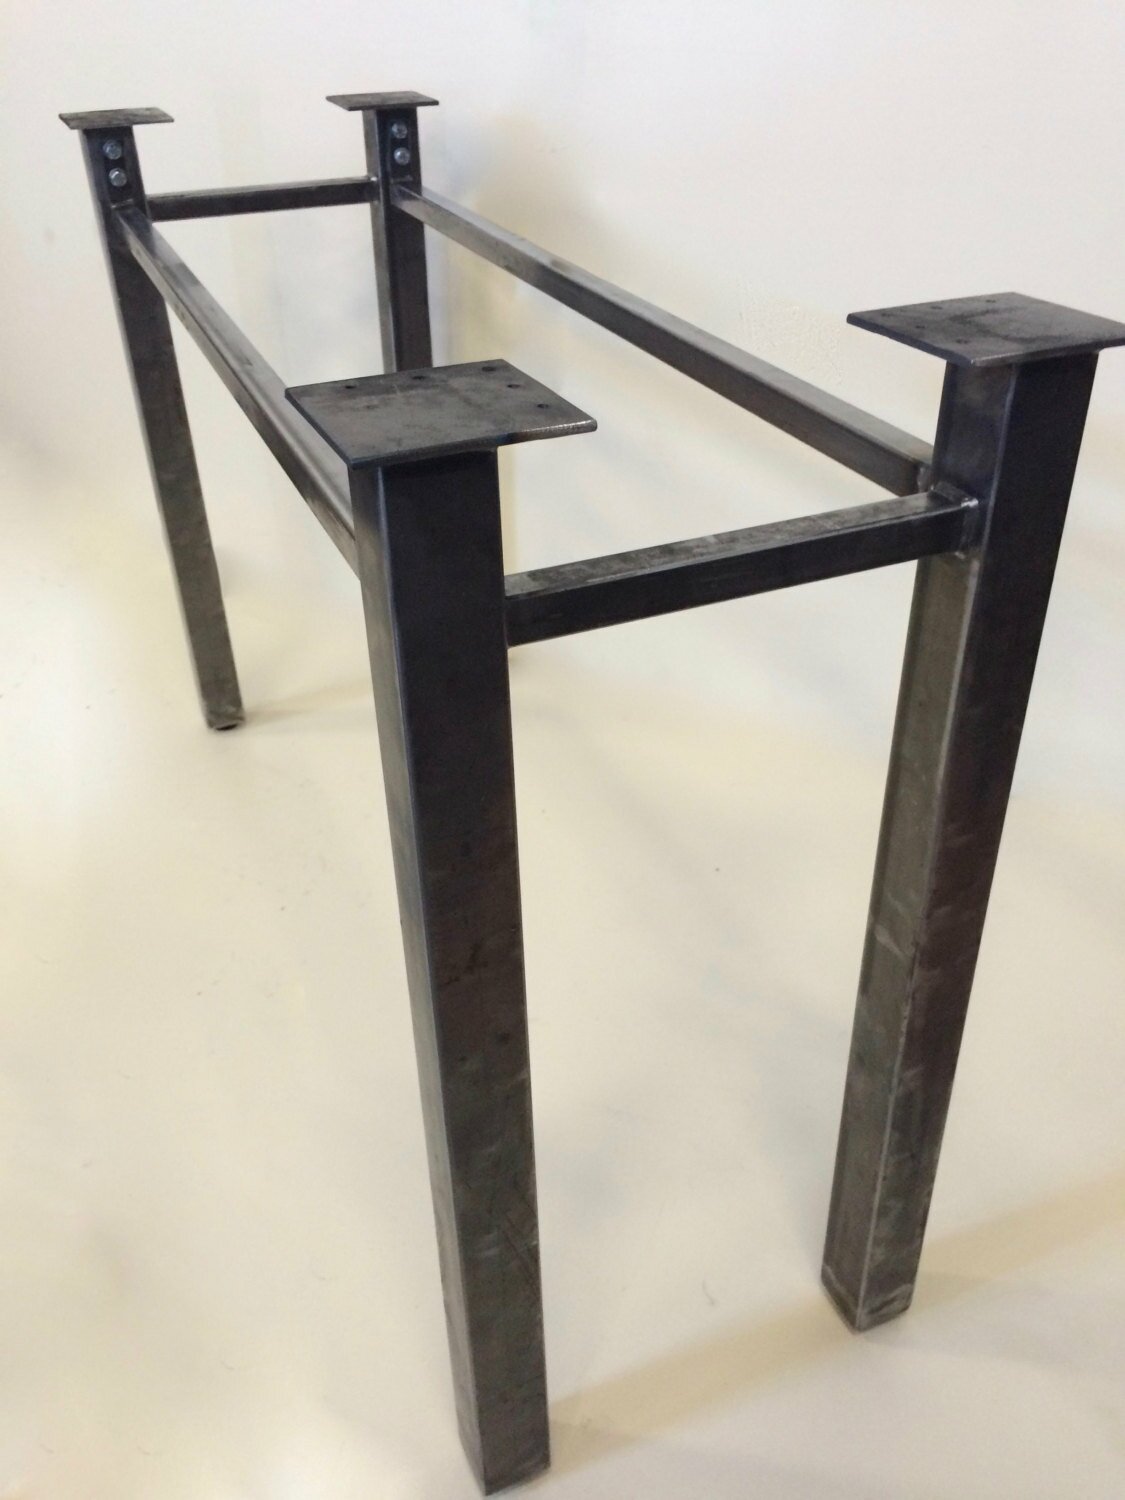 Work Bench Legs | Workbench Frame Kits | Legs for Workbench